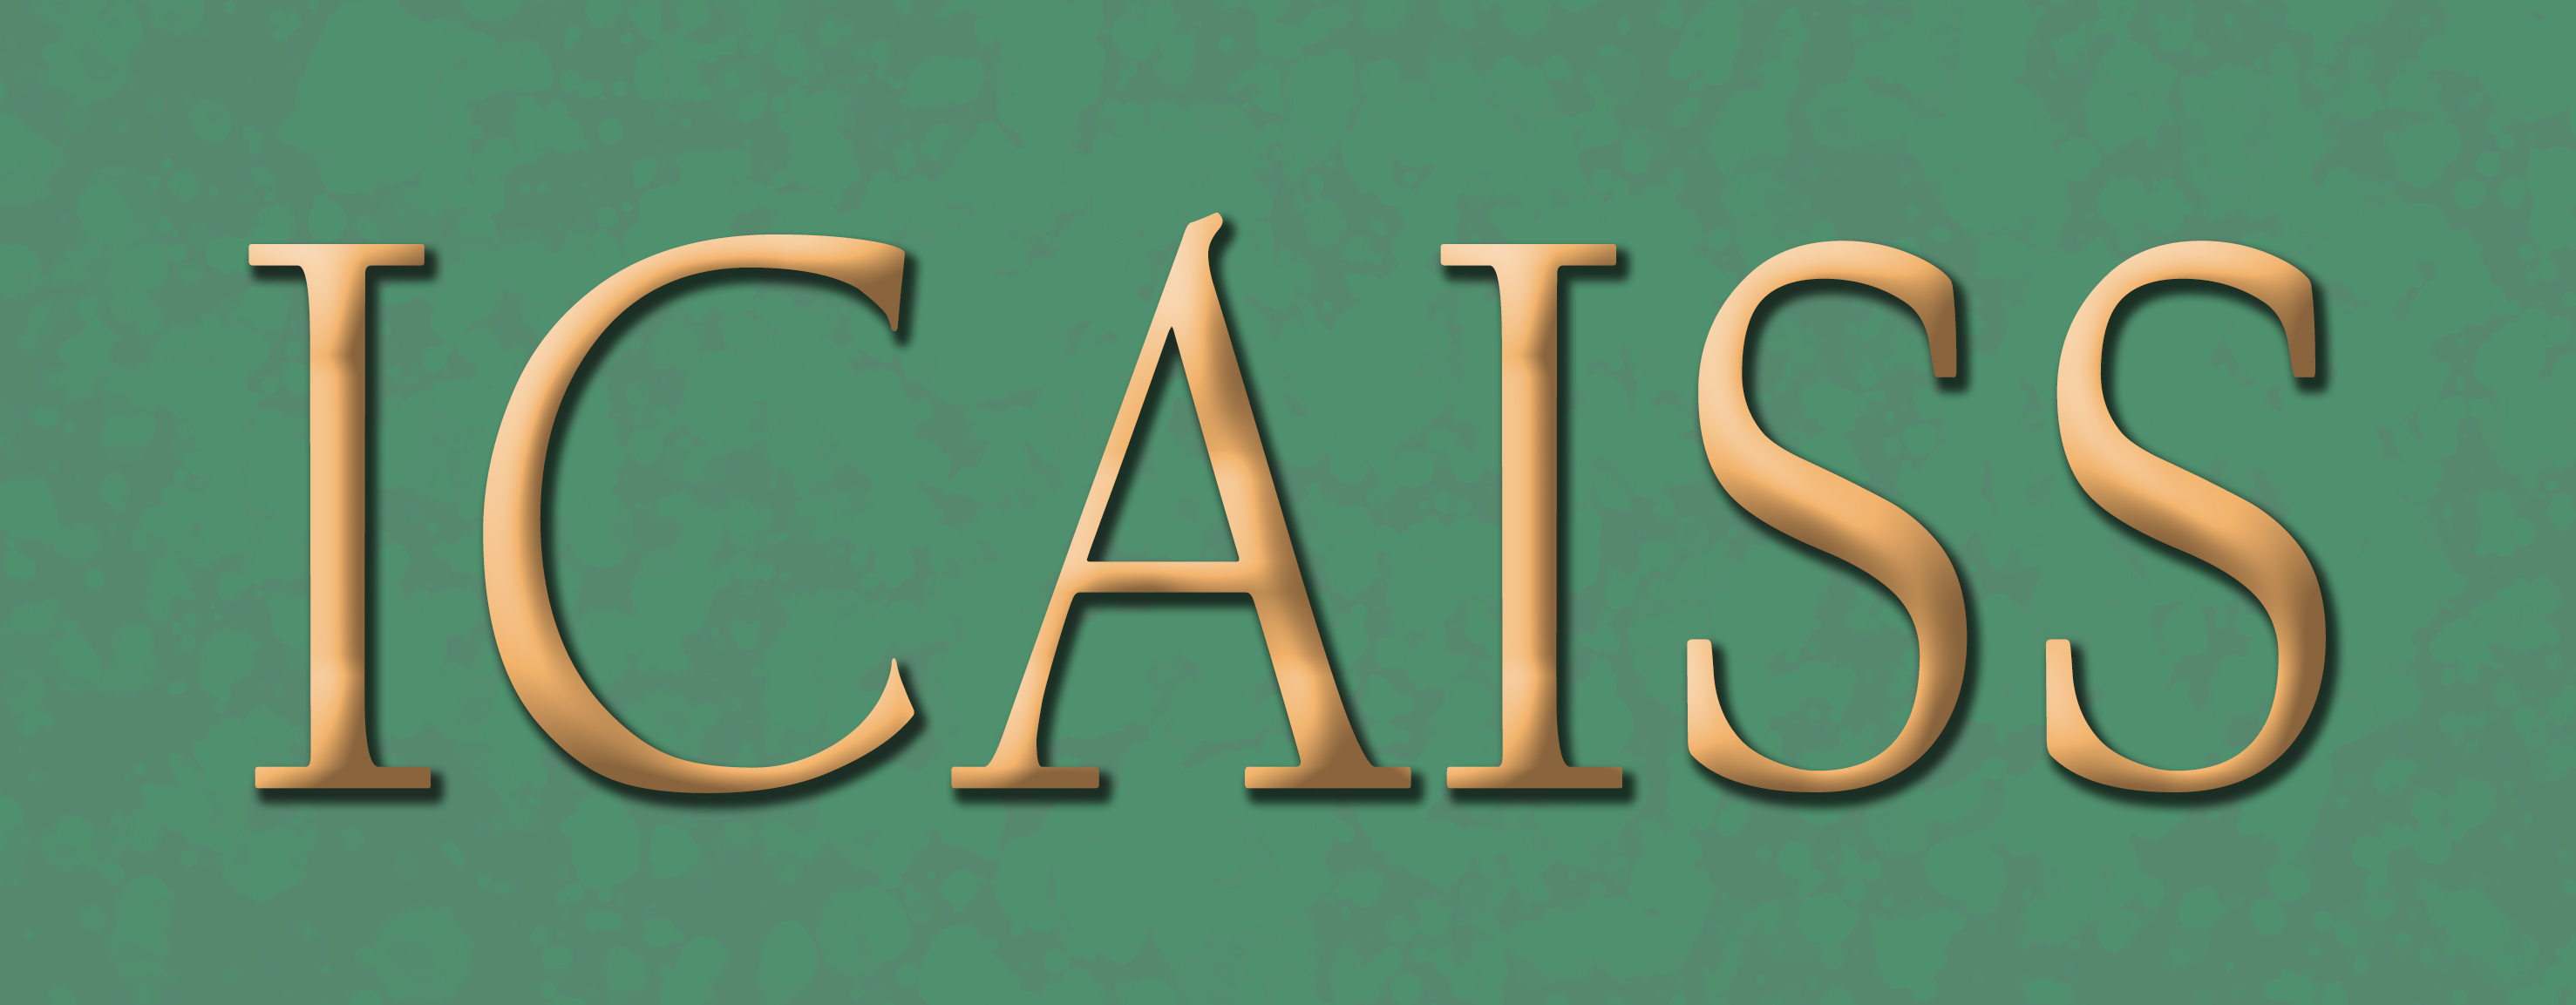 ICAISS logo